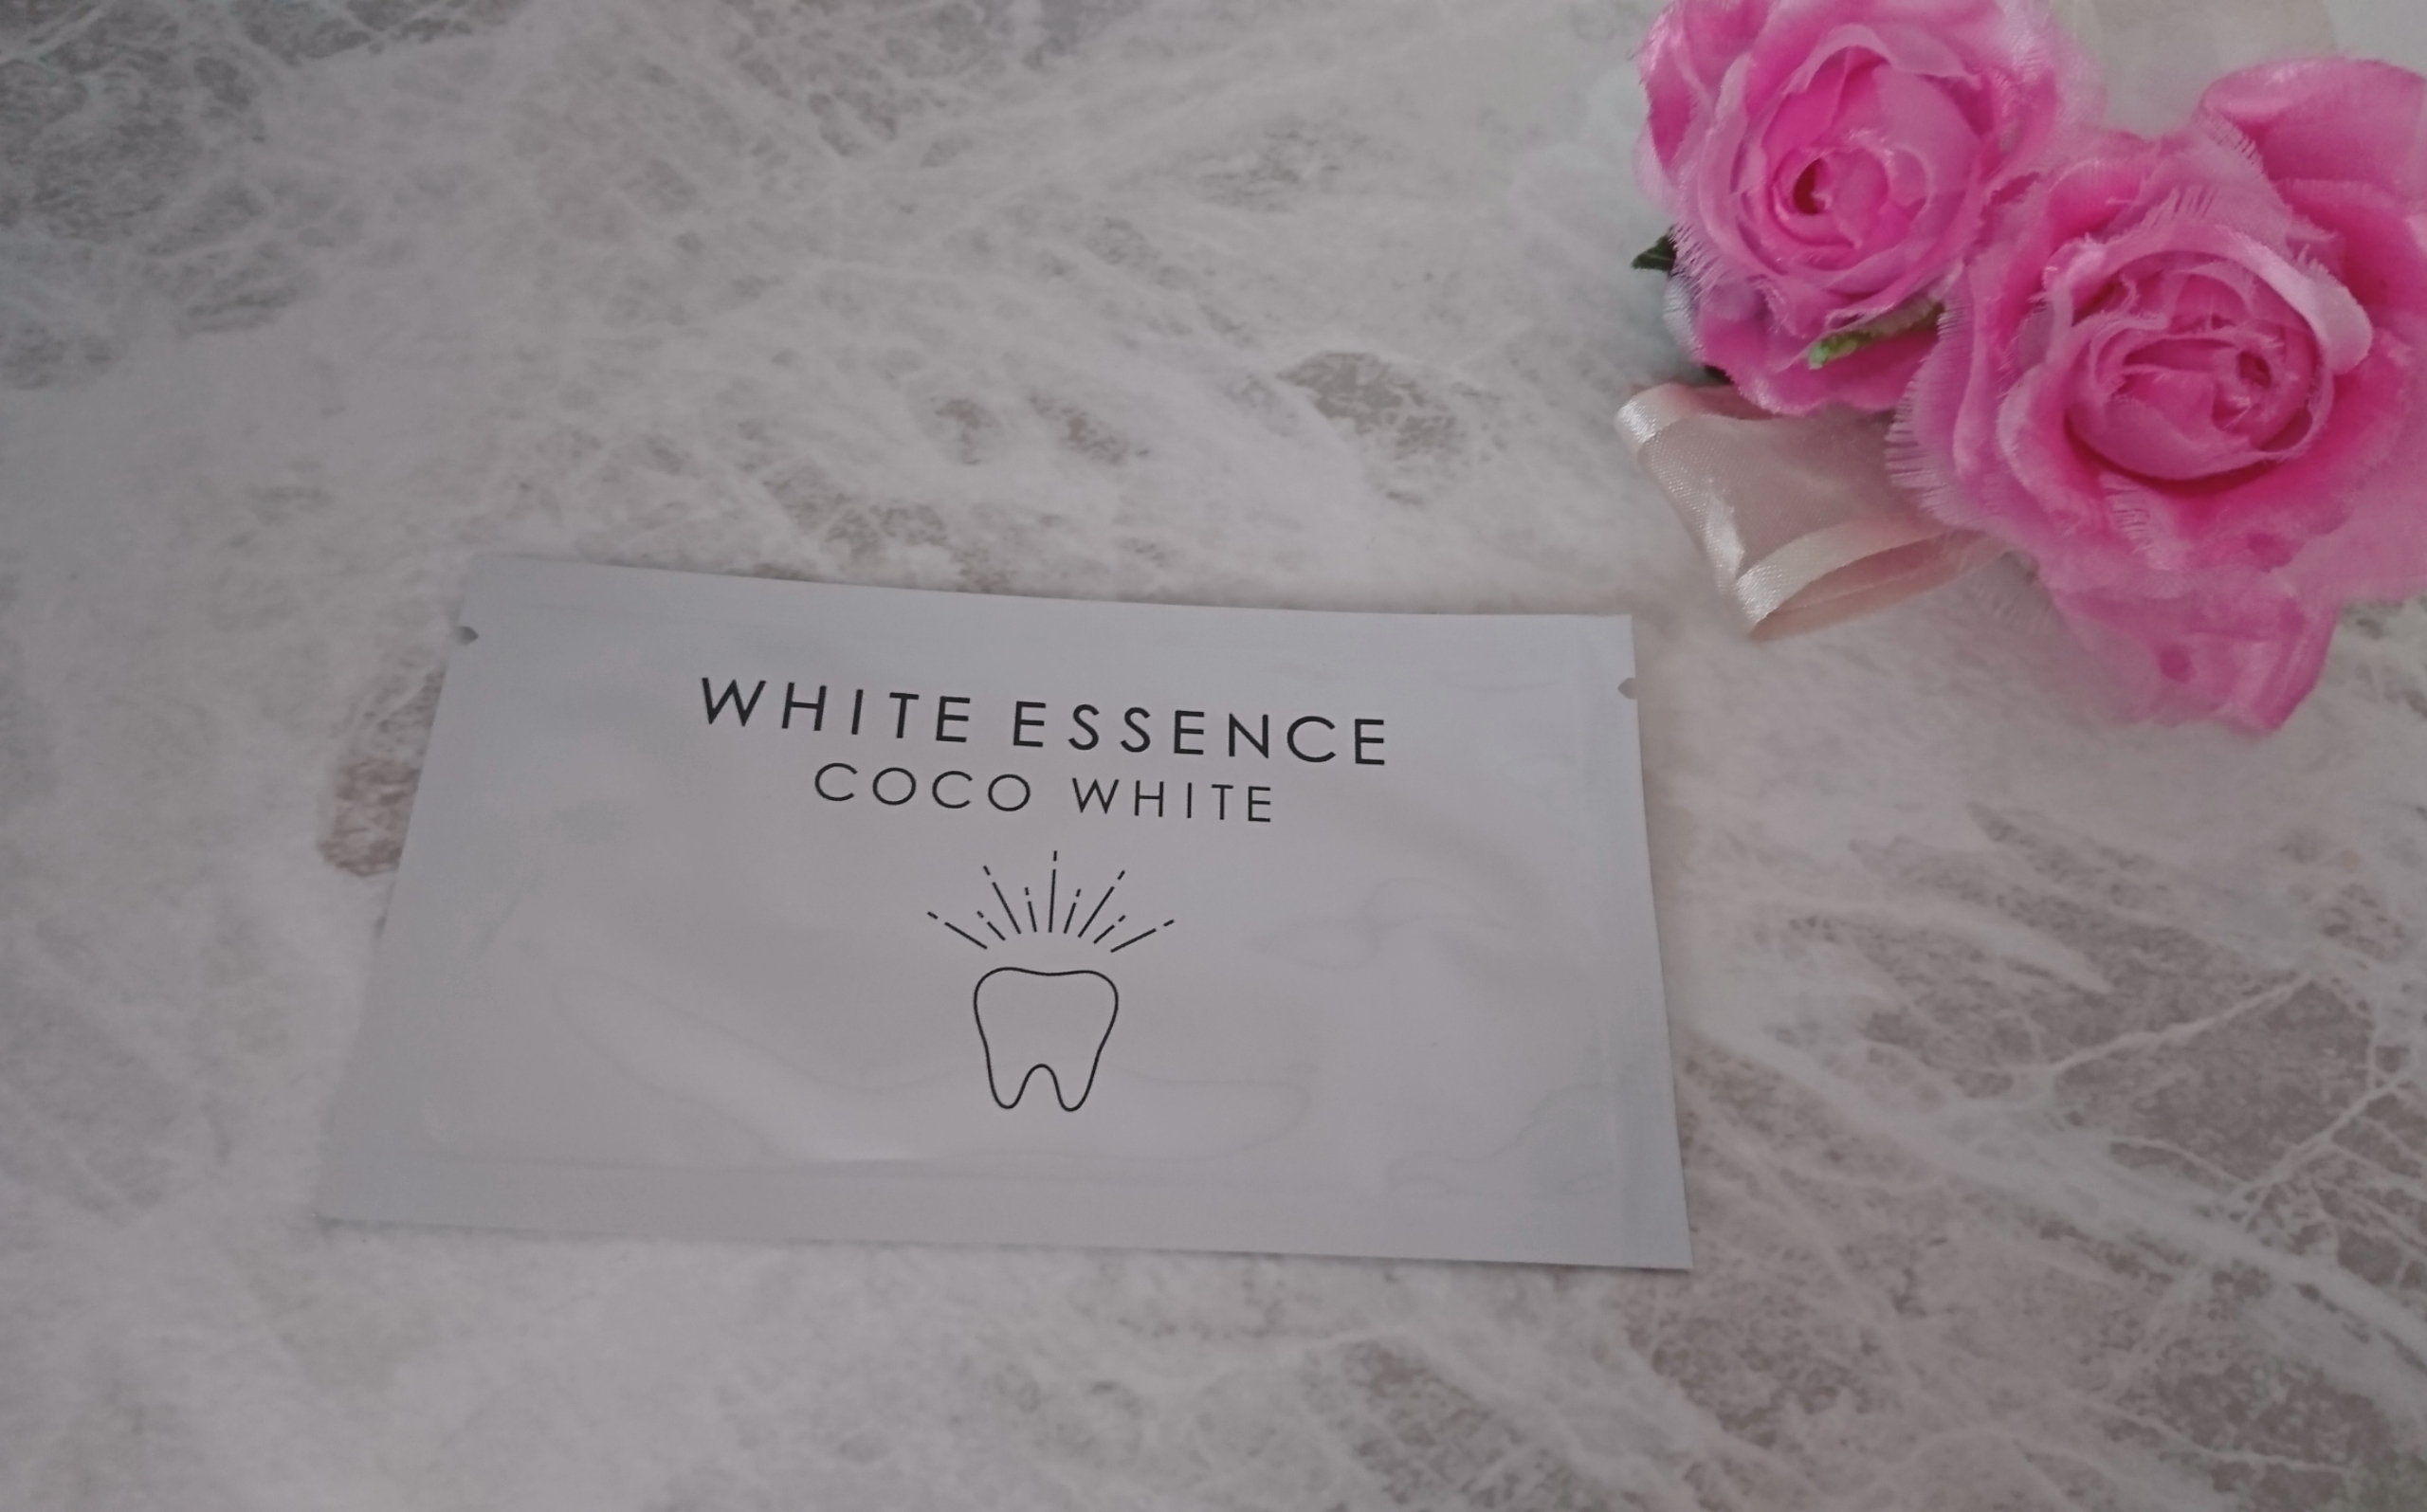 WHITE ESSENCE(ホワイトエッセンス) ホワイトニングシート ココホワイトを使ったYuKaRi♡さんのクチコミ画像5